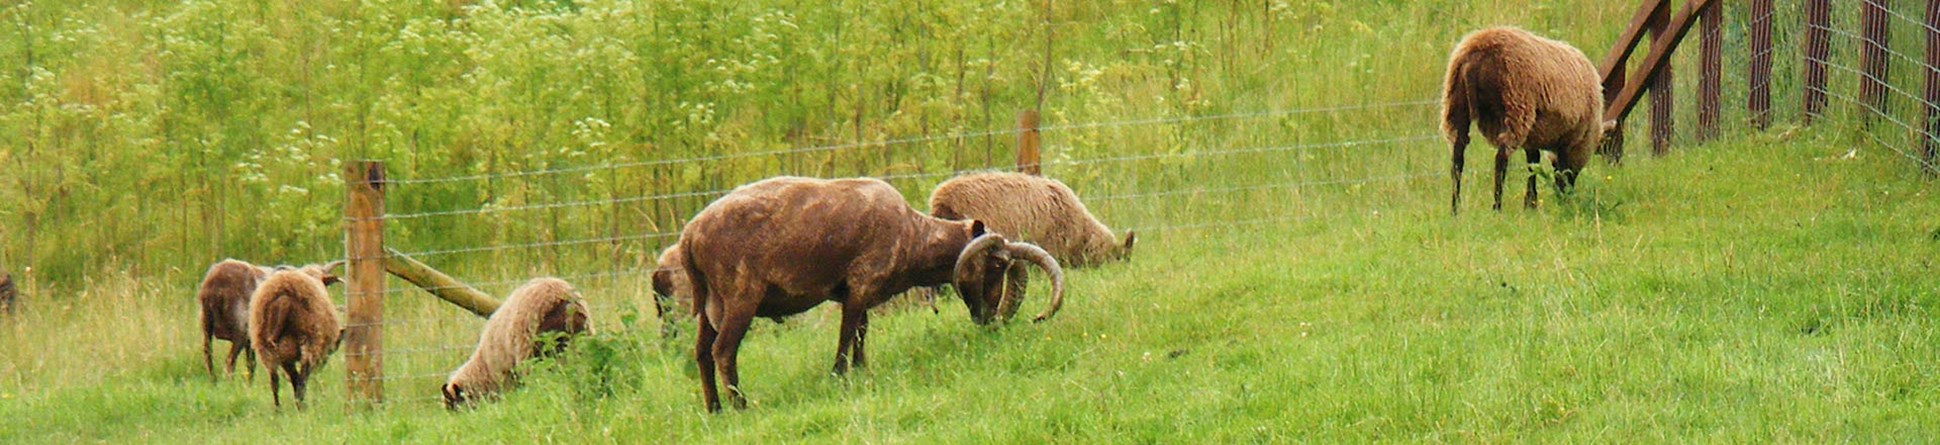 Photograph of sheep